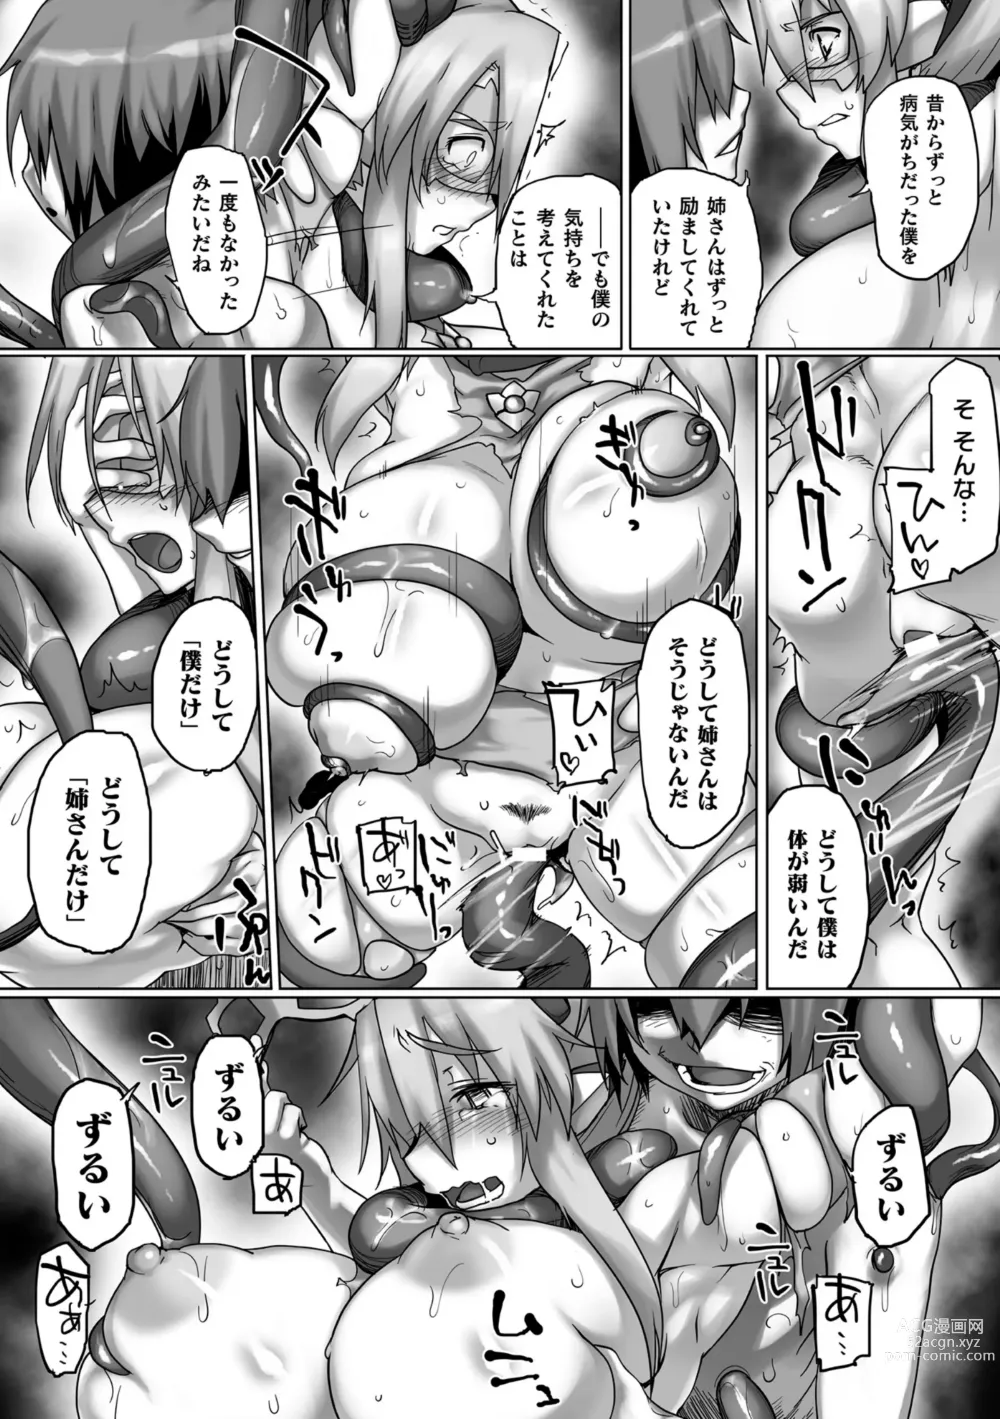 Page 163 of manga Kusshita Otome ga Ochiru Koro - When a surrendered maiden becomes sexually degraded